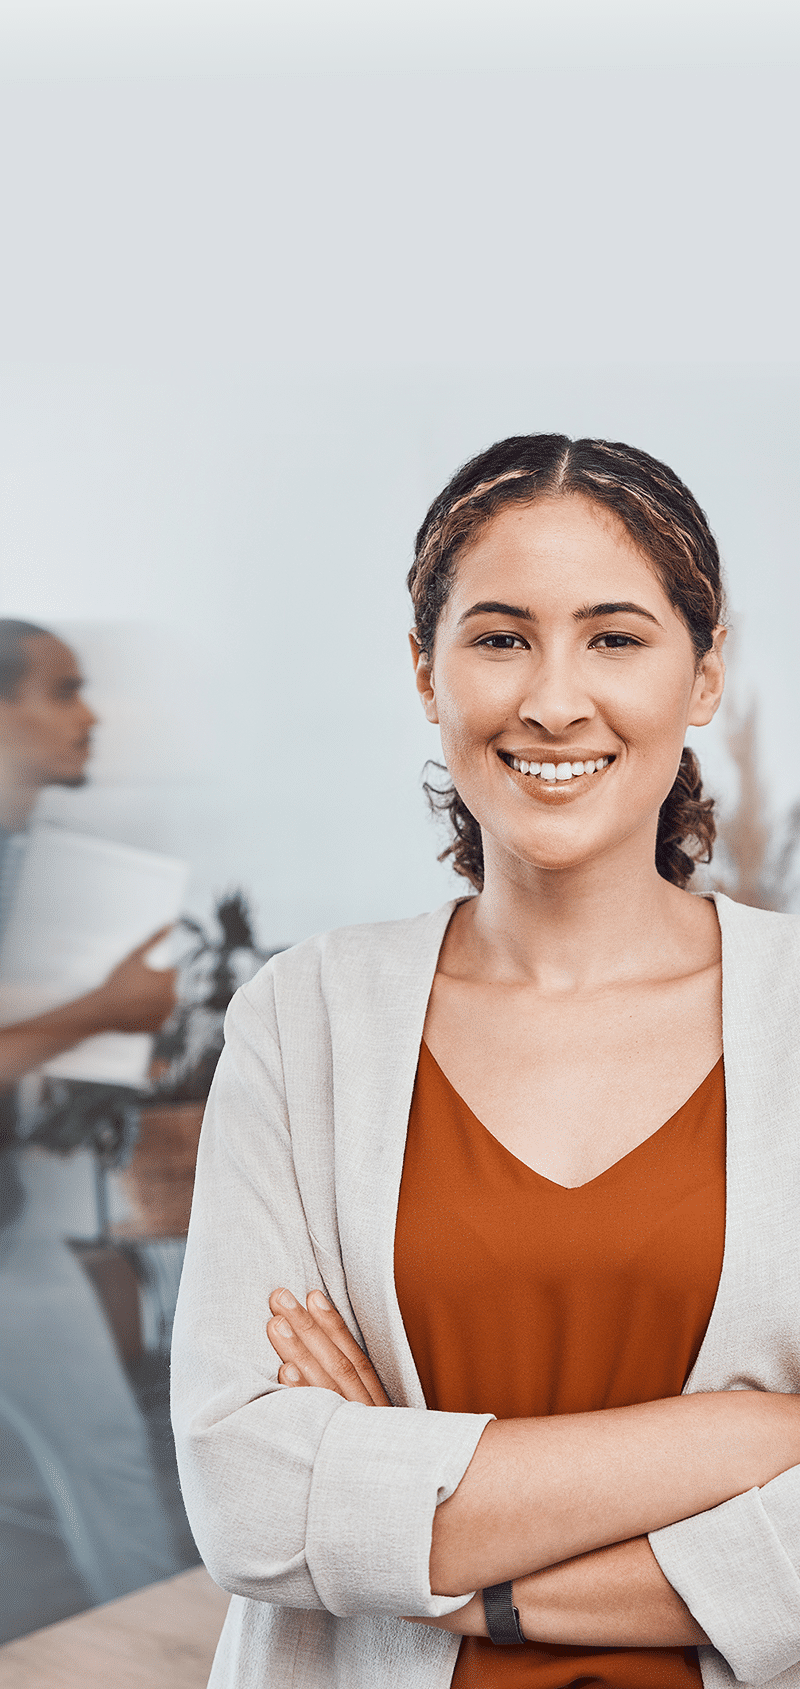 femme souriante avec image de bureau